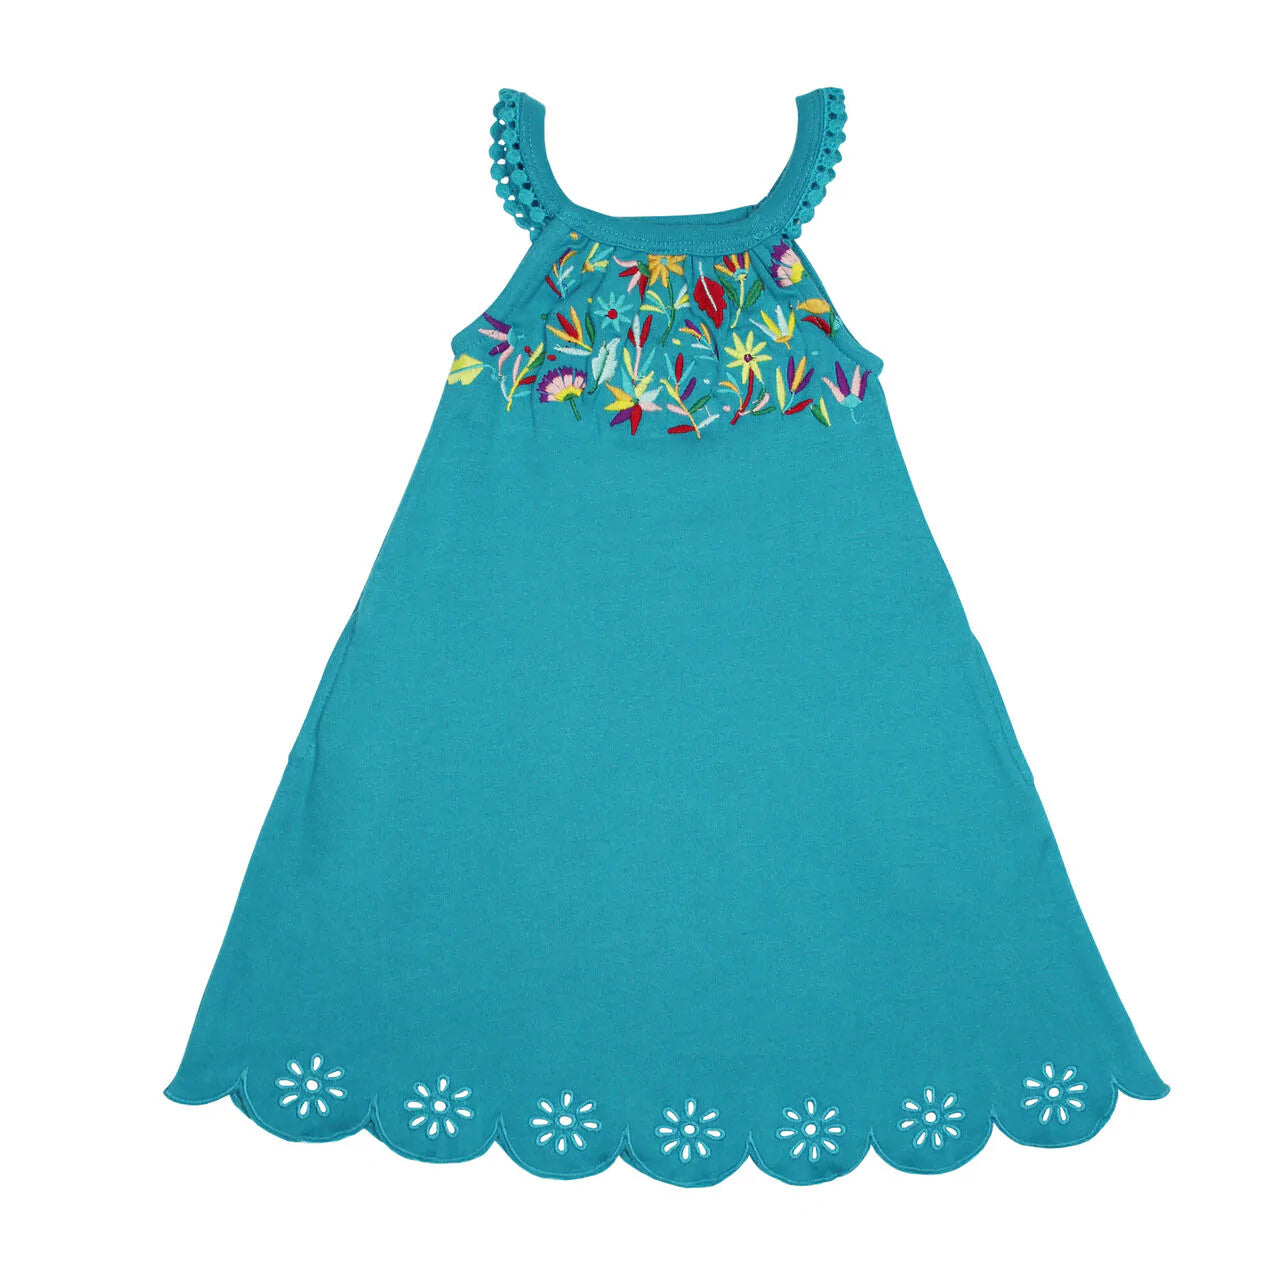 Twirl Dress (Pockets) - Teal Floral Embroidered